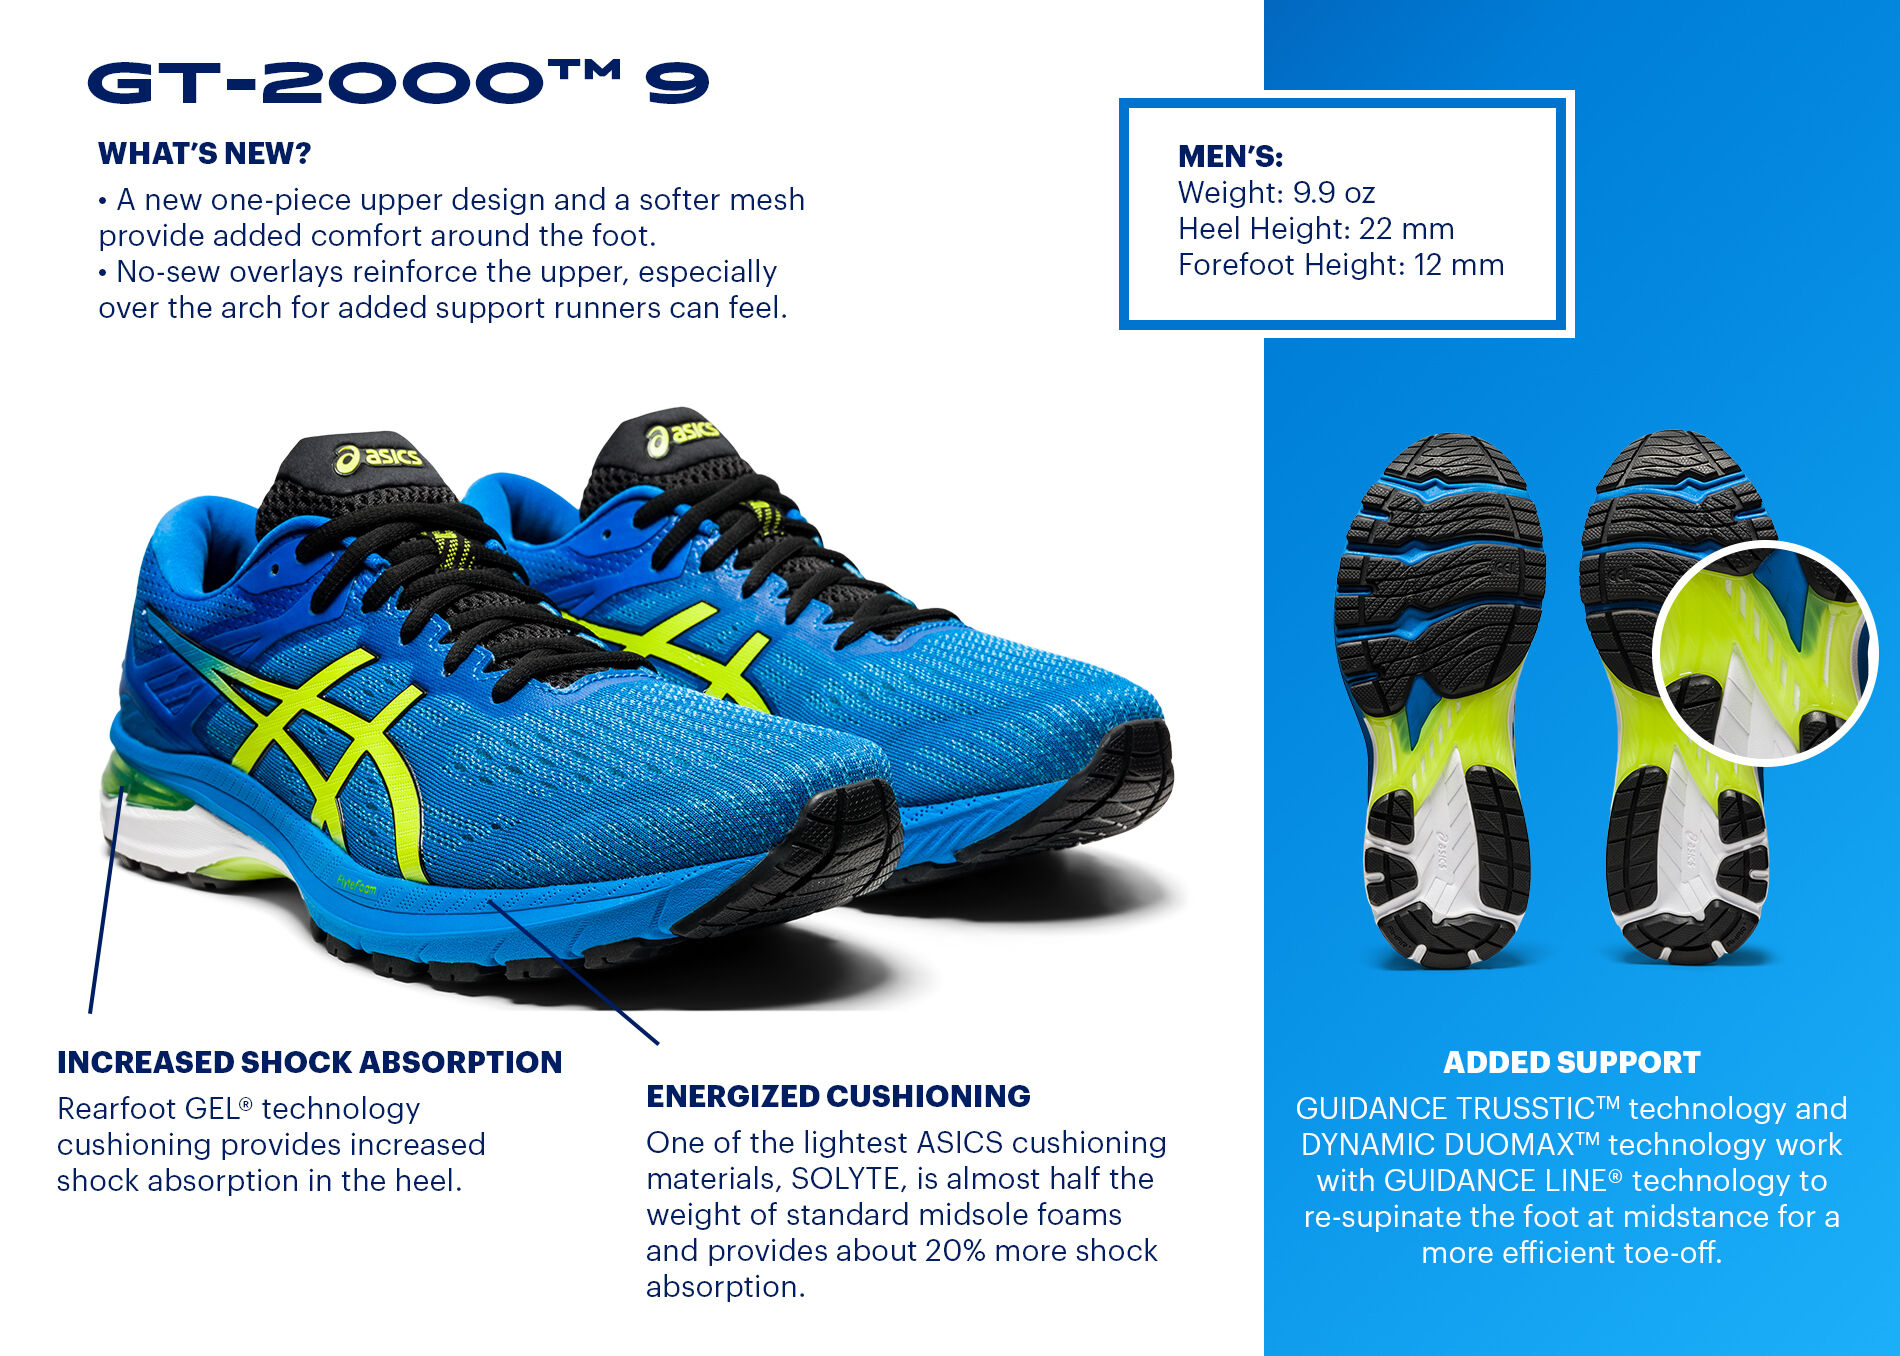 Men's GT-2000 9 | Black/Directoire Blue | Running Shoes | ASICS